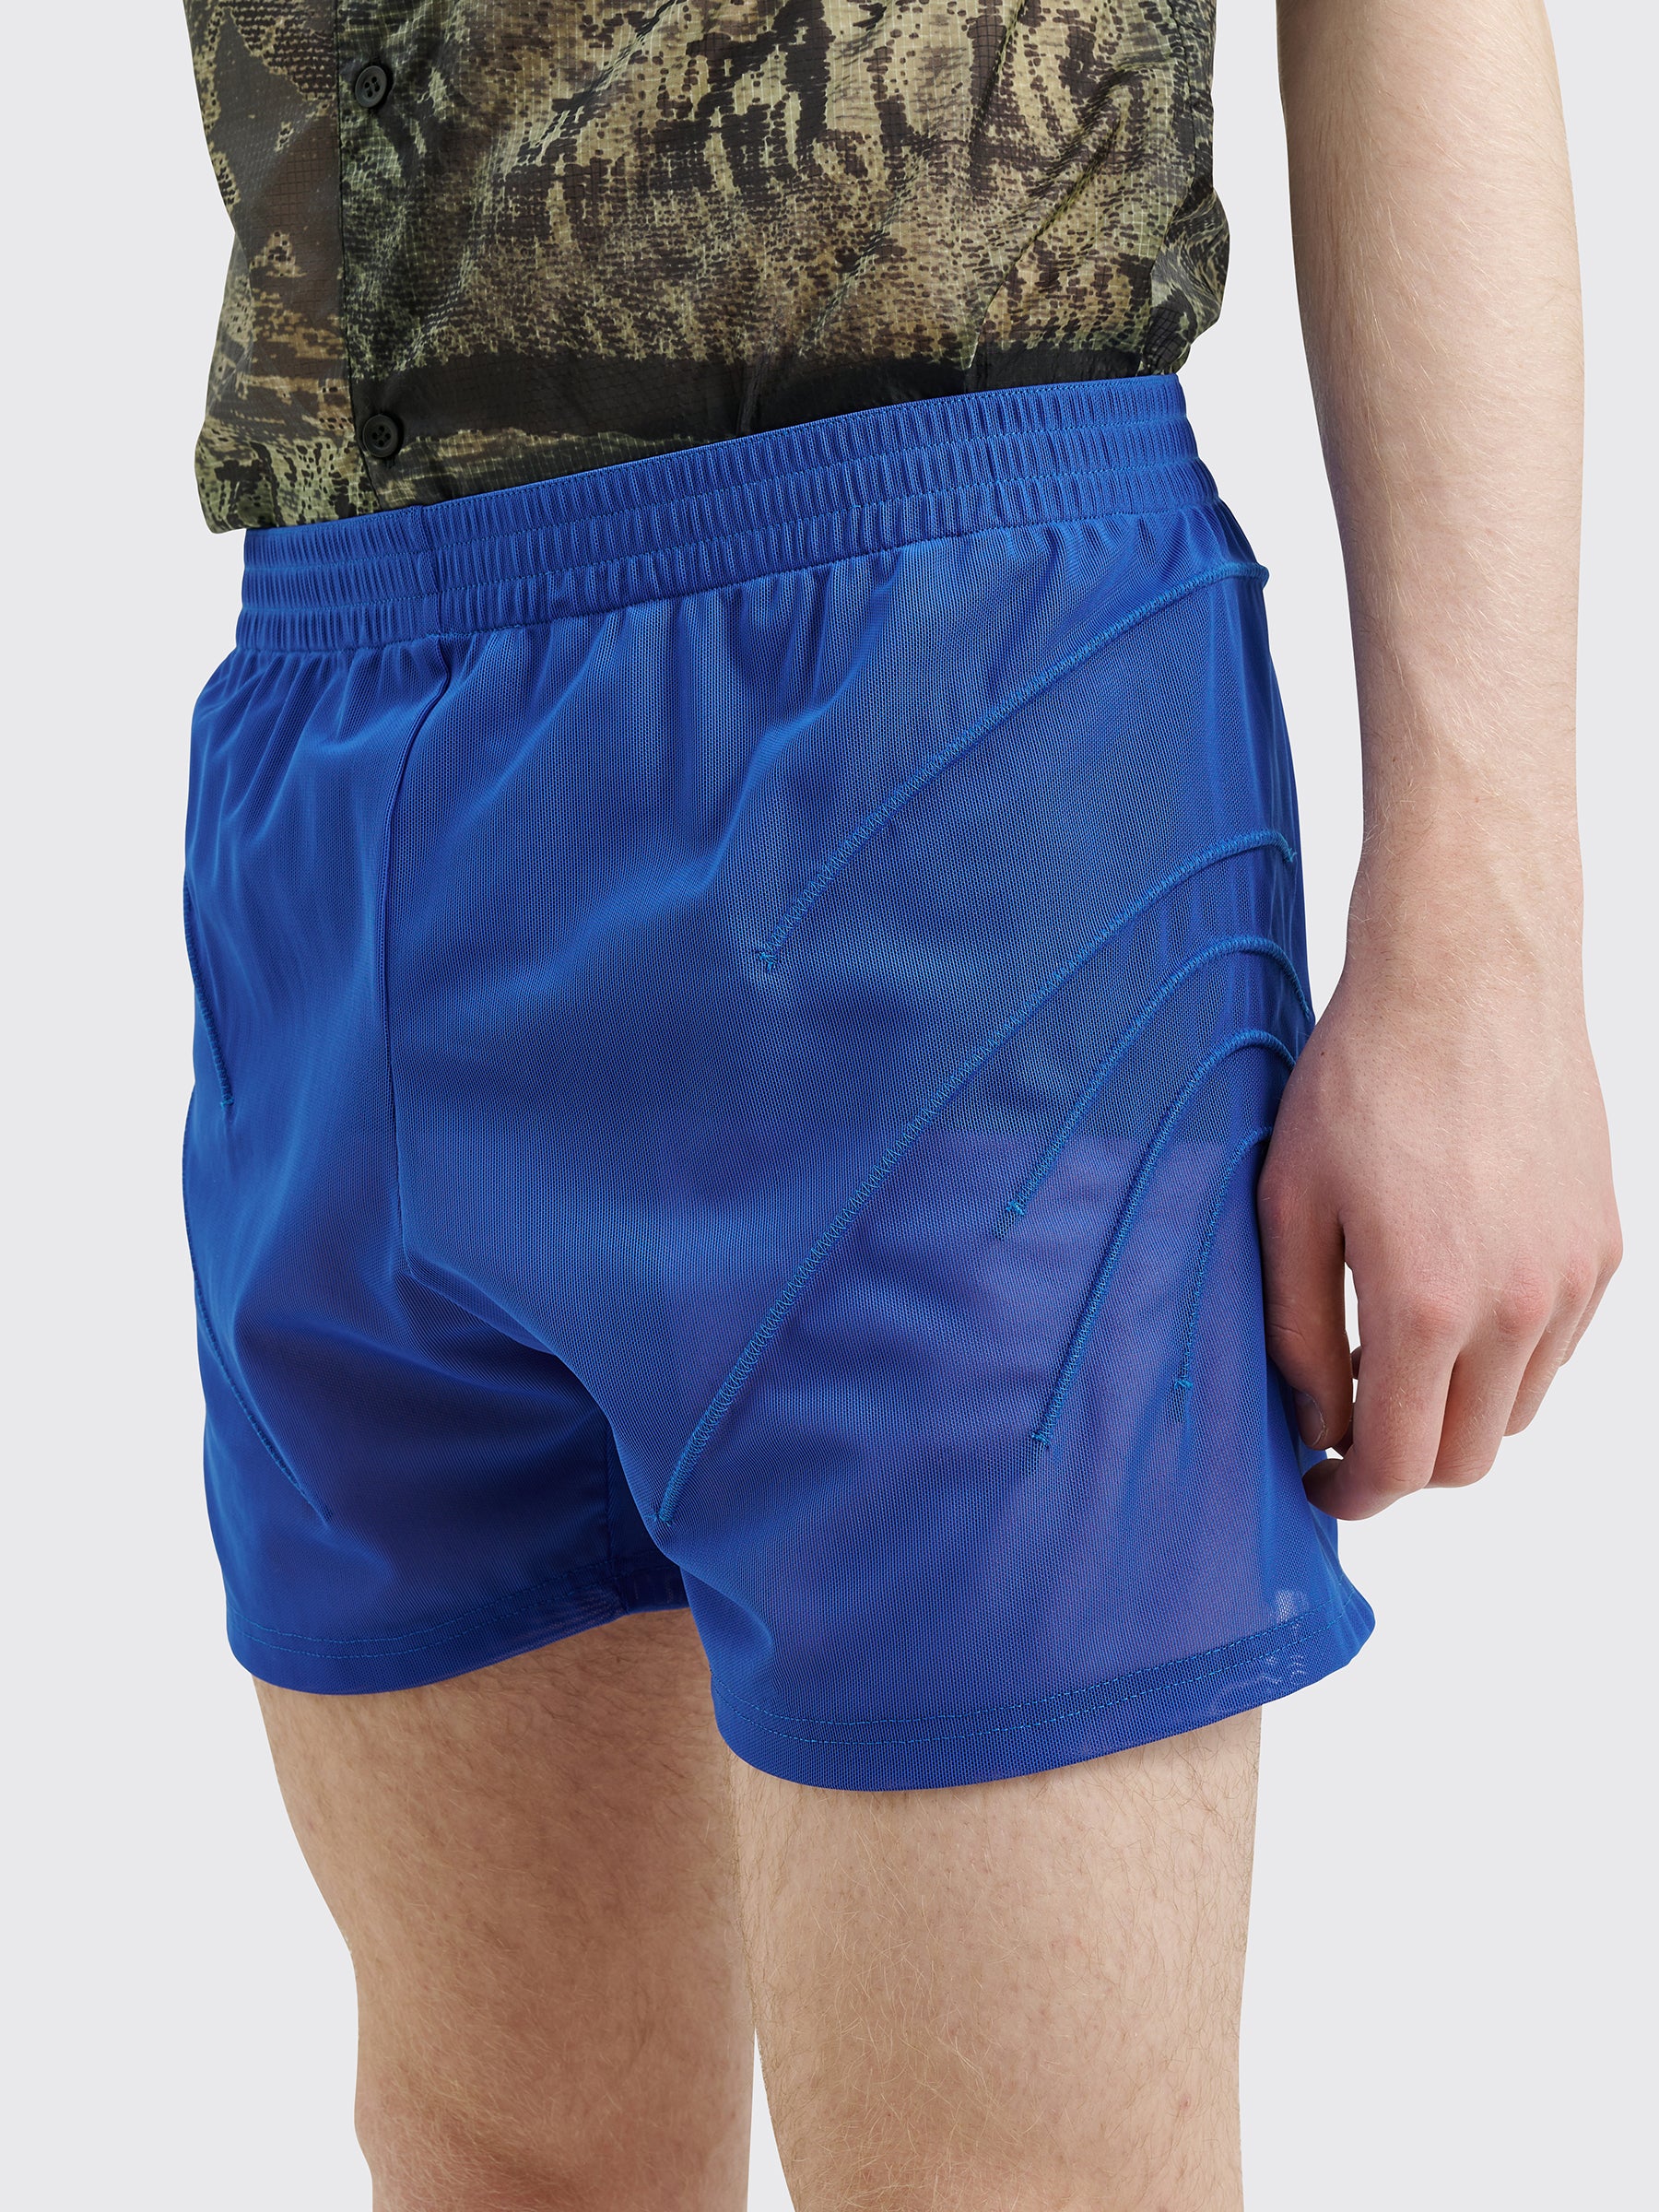 Olly Shinder Veins Sports Shorts Blue